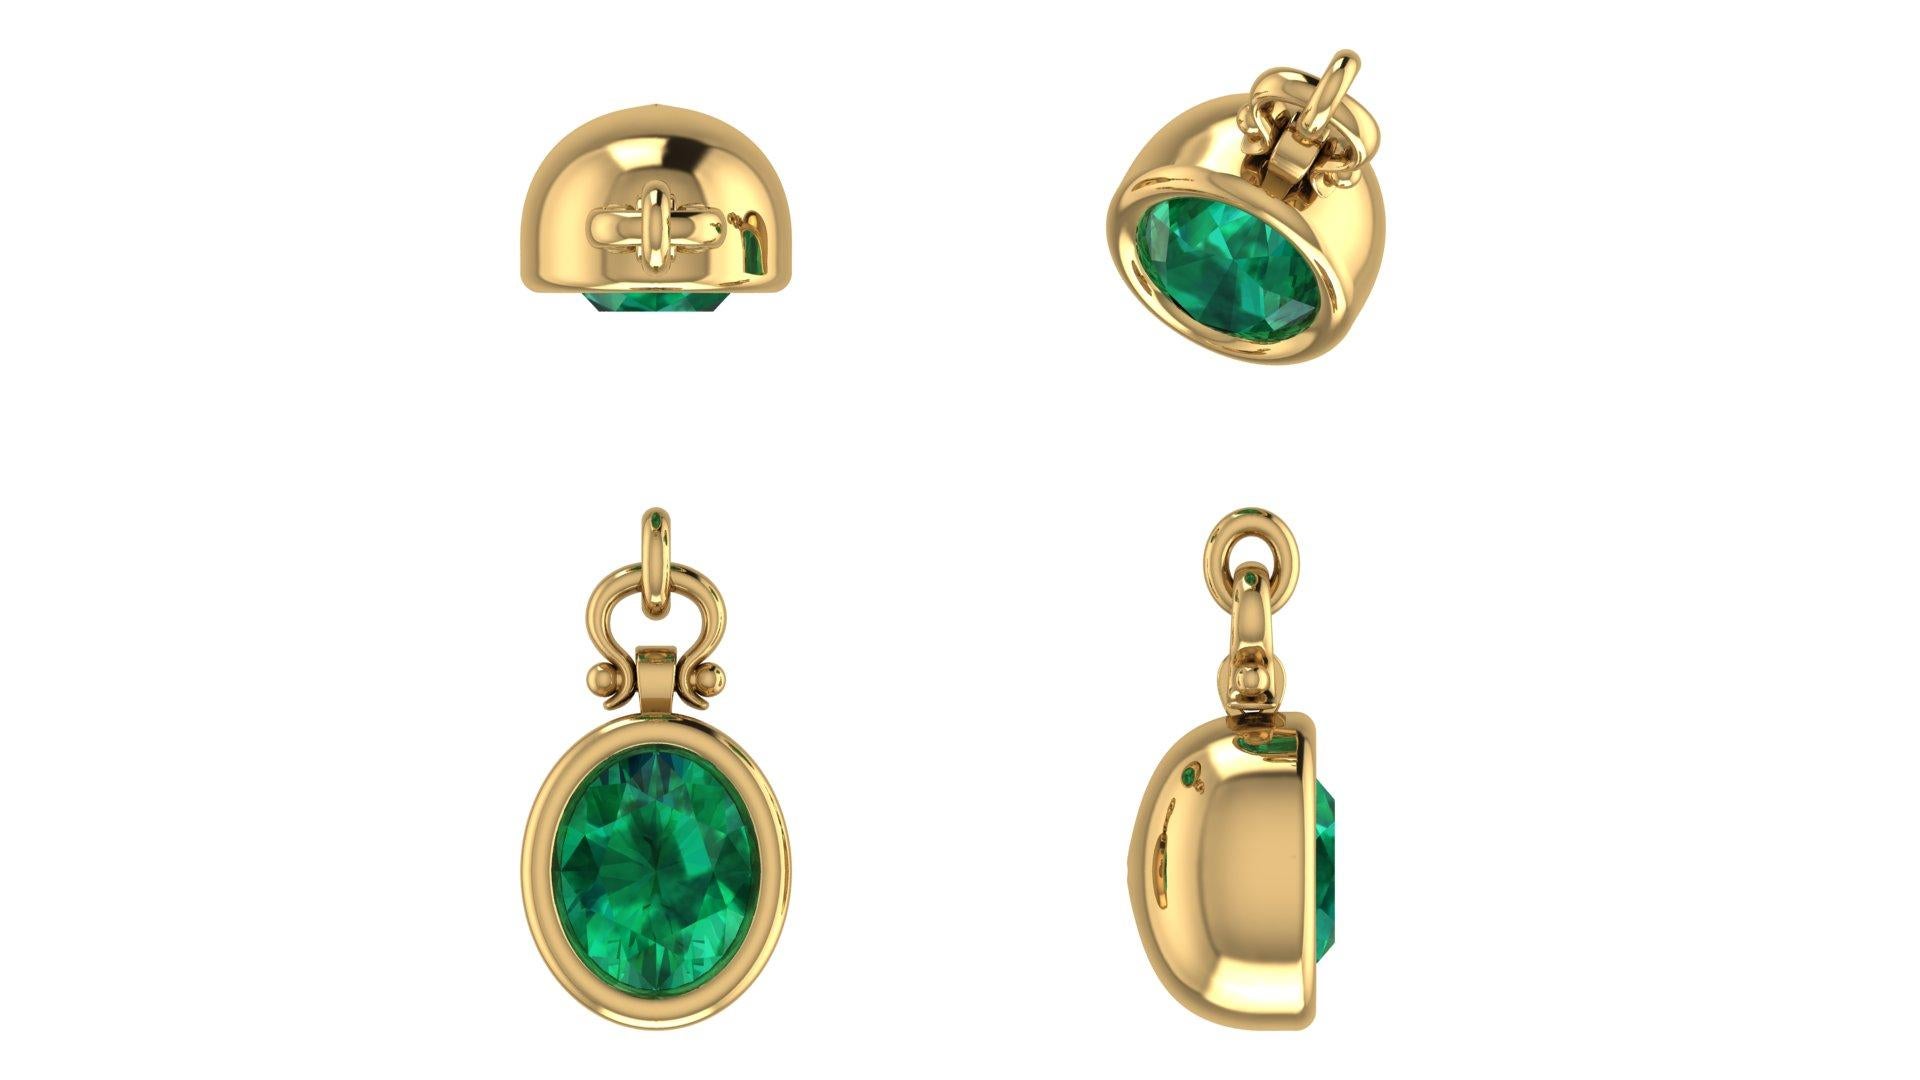 Contemporary IGITL Certified 2.69 Carat Oval Cut Emerald Pendant Necklace in 18k For Sale